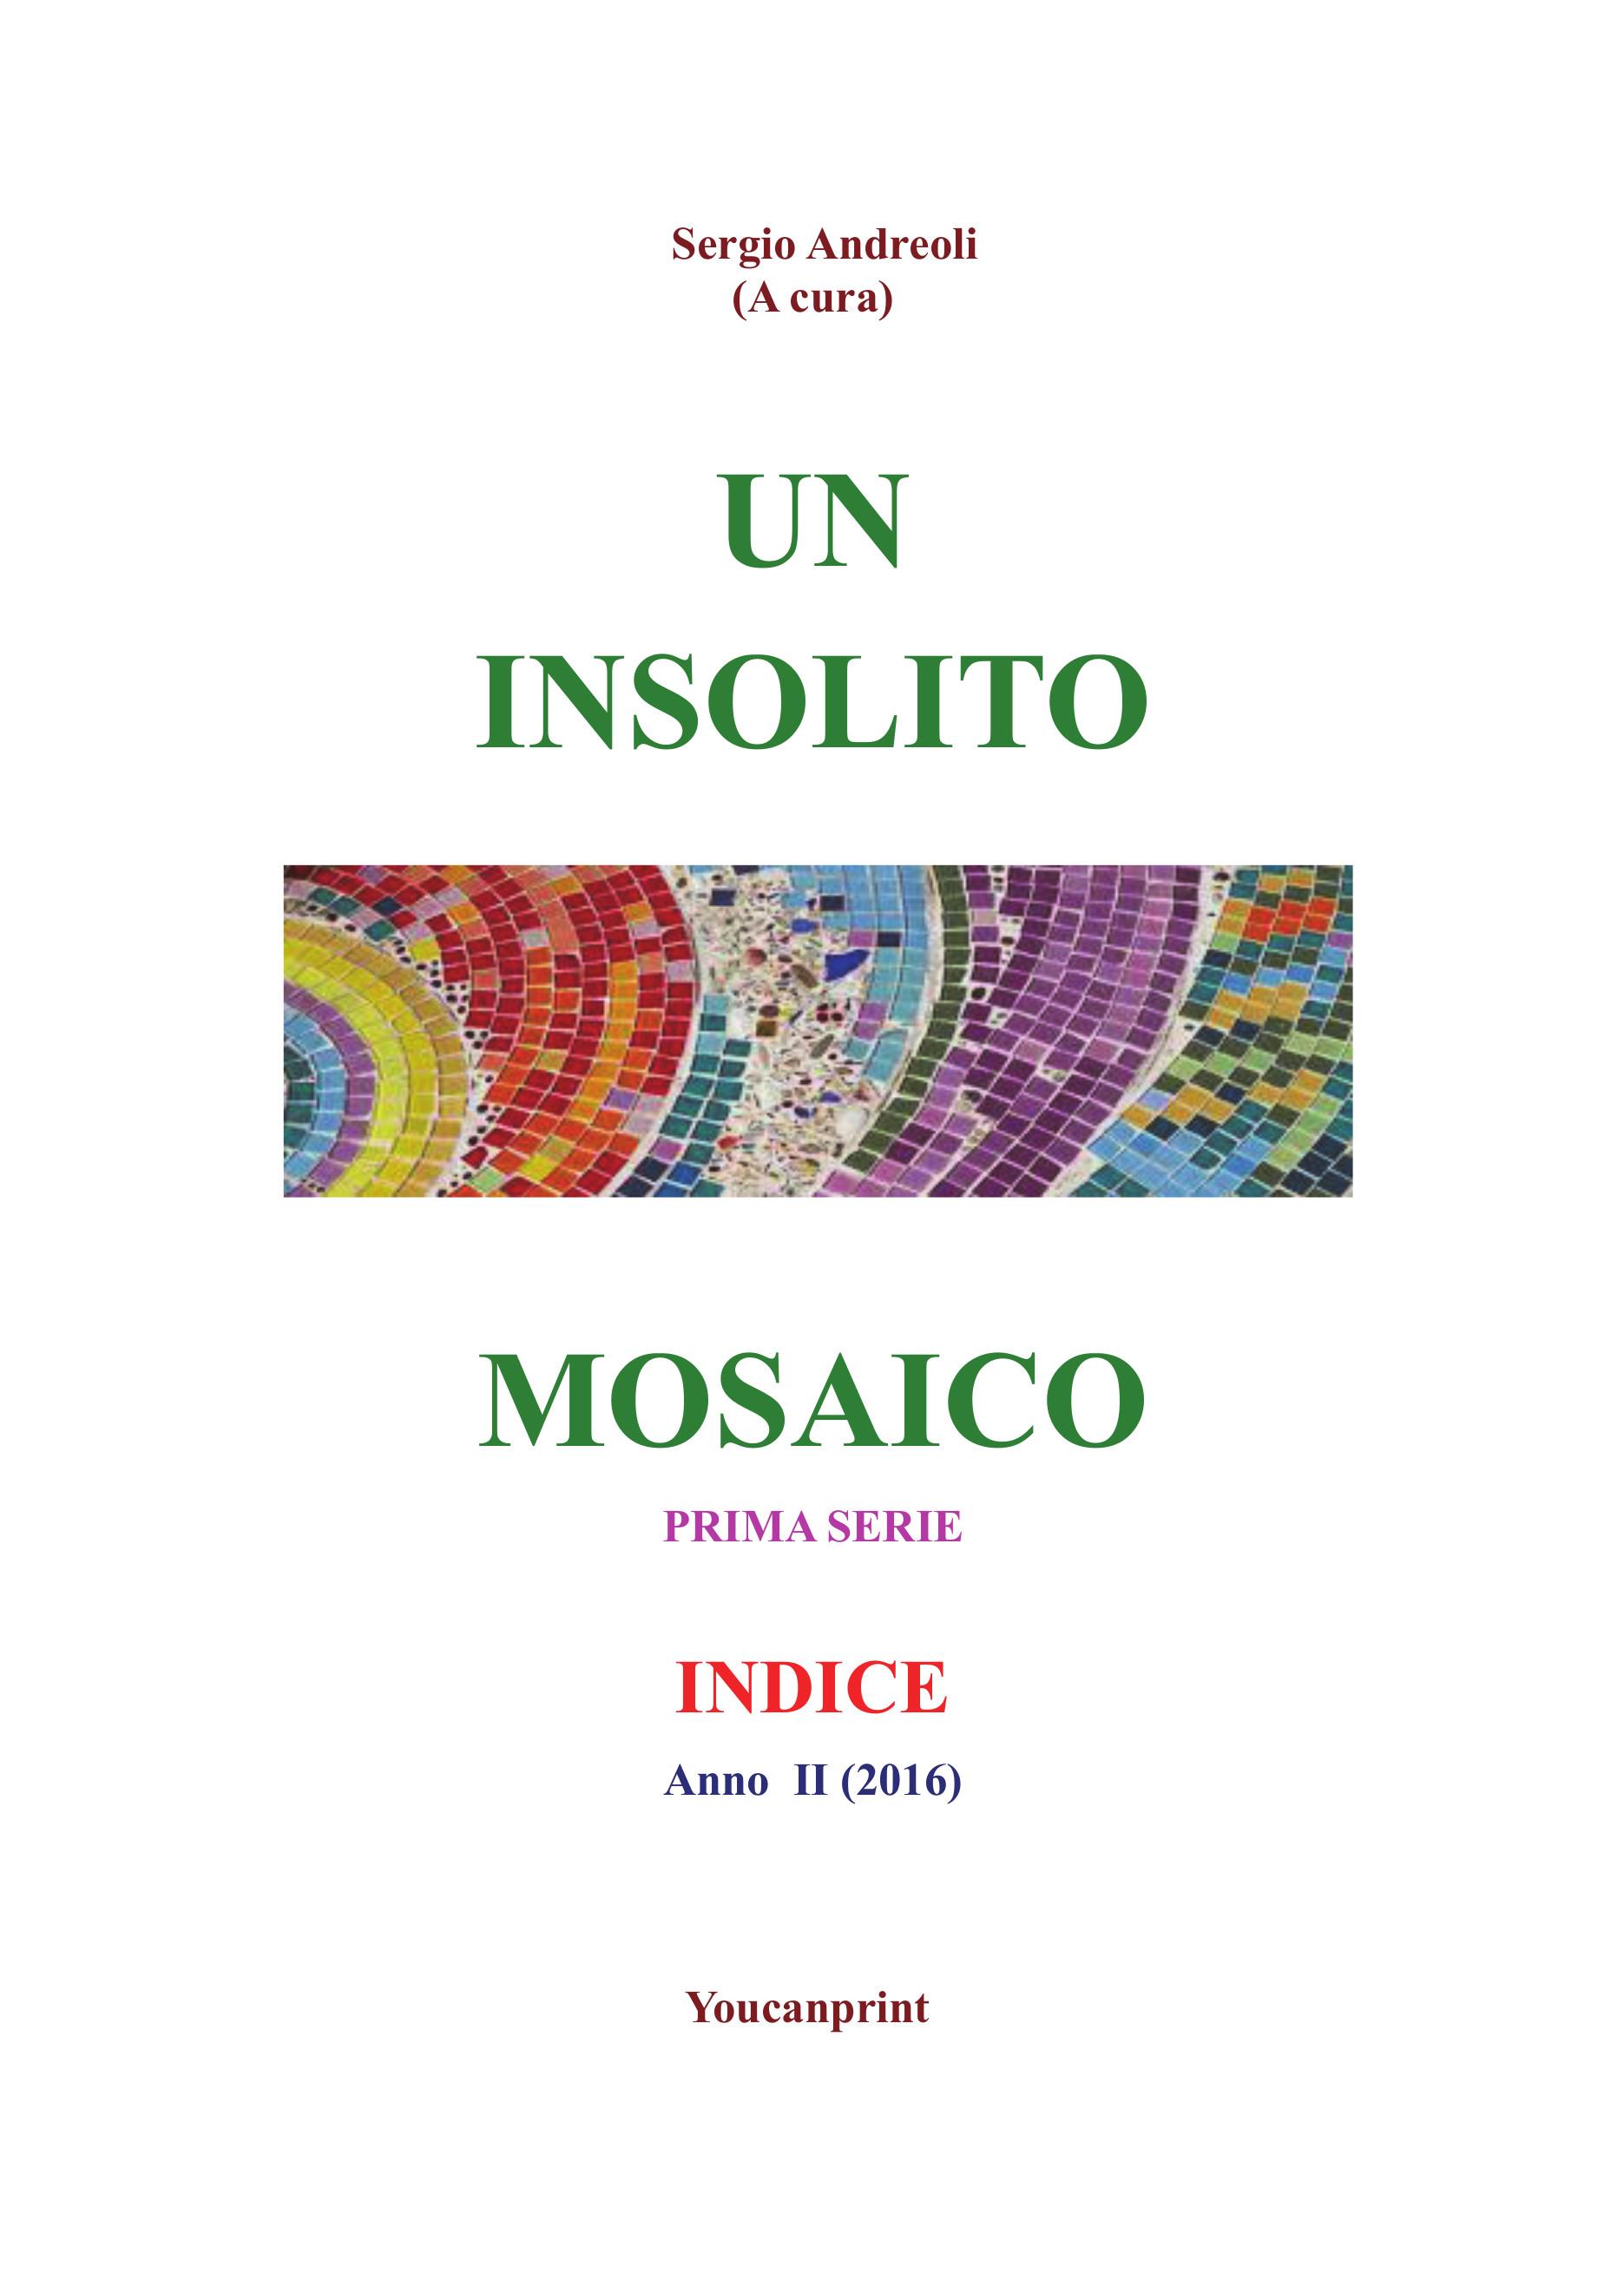 Un insolito mosaico - Indice